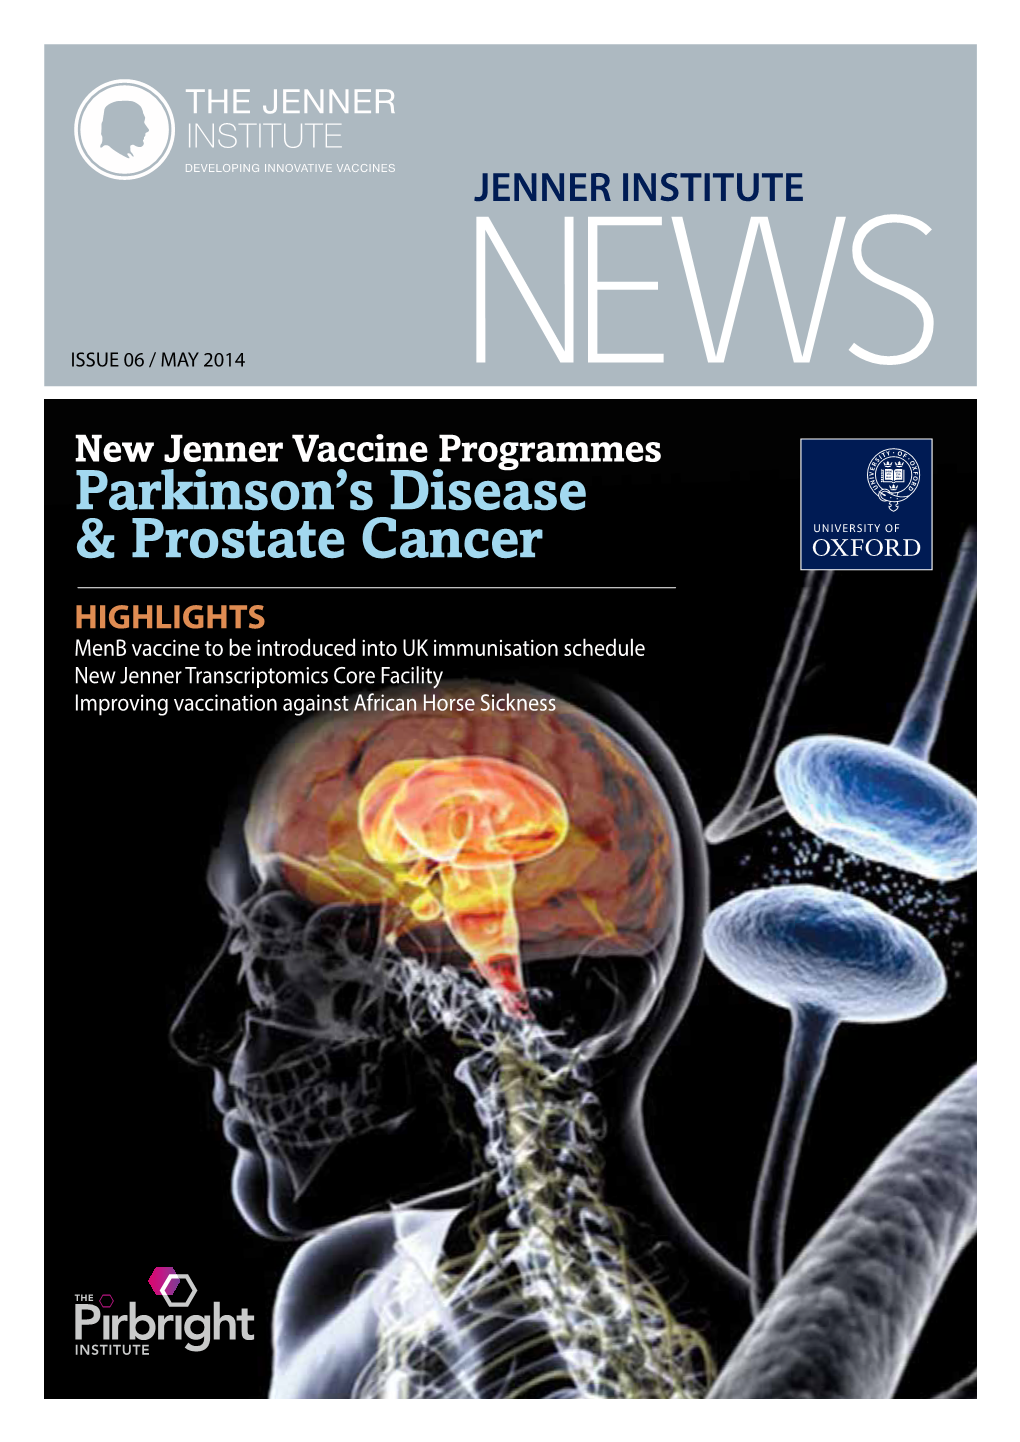 Parkinson's Disease & Prostate Cancer